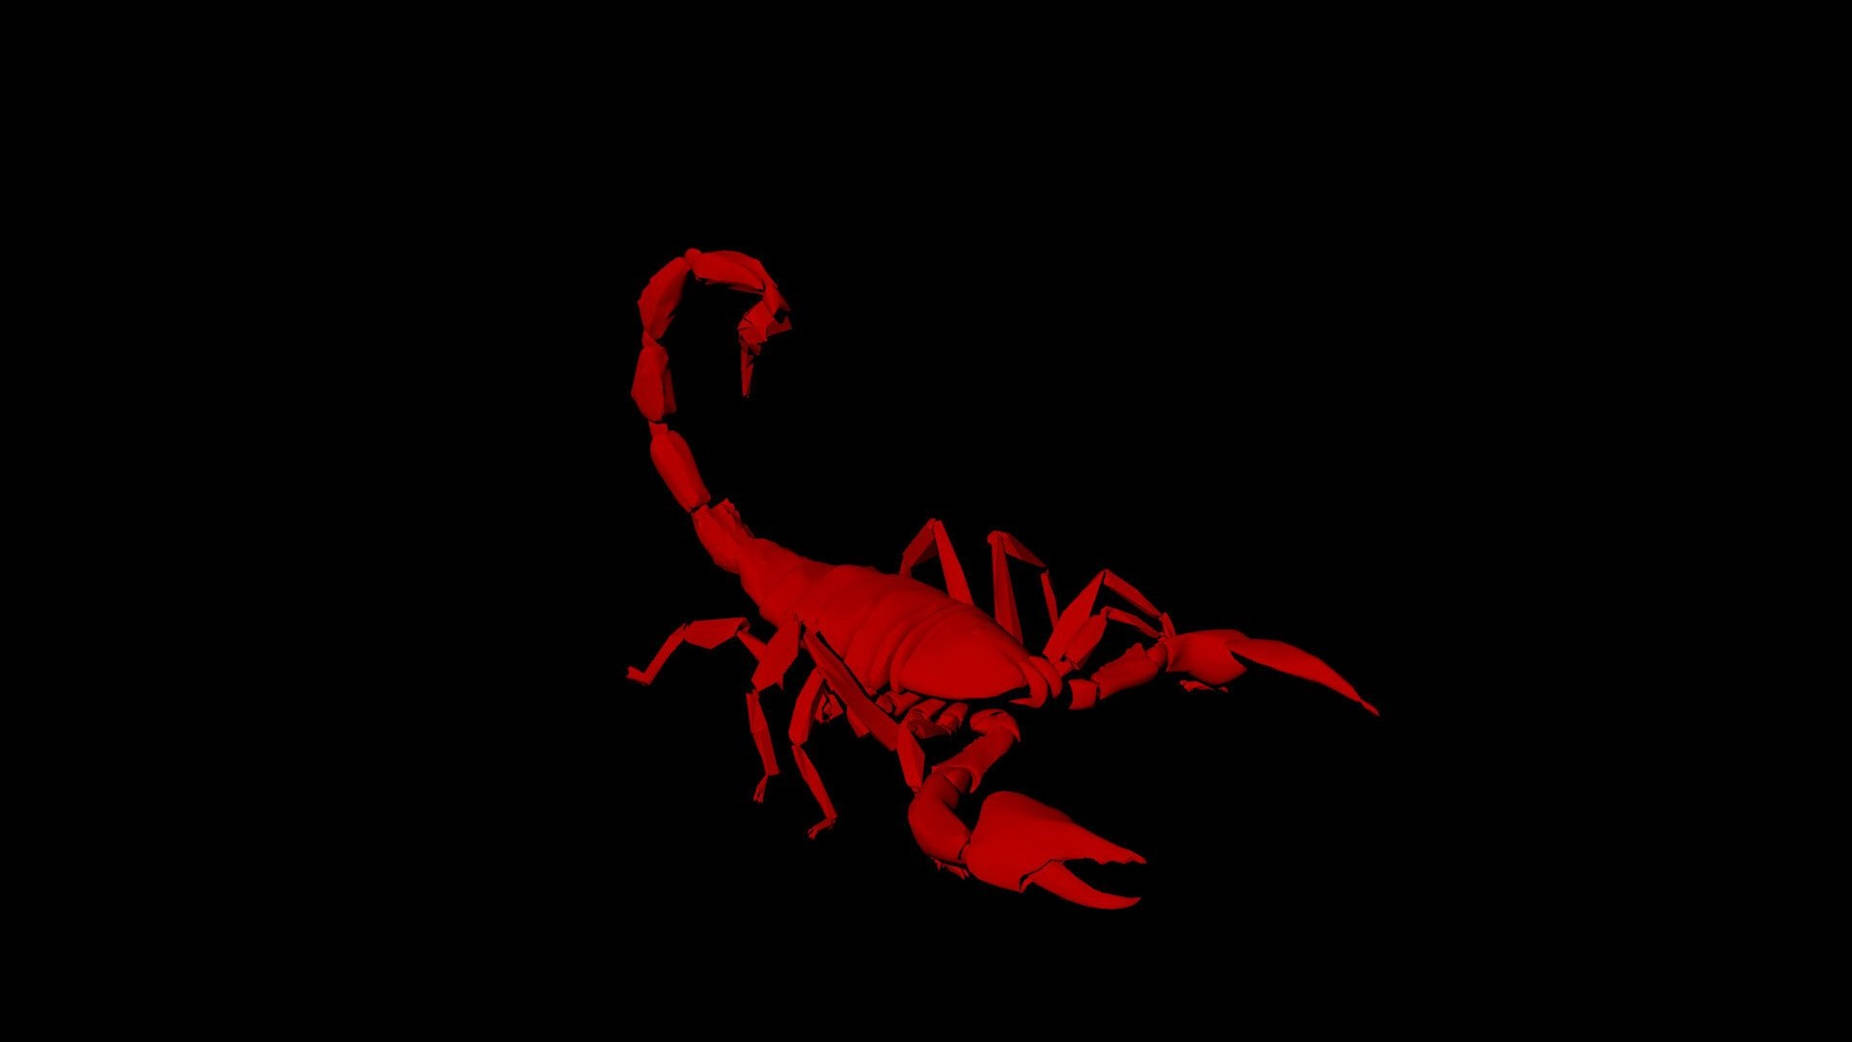 Scorpion Black And Red Art Wallpaper